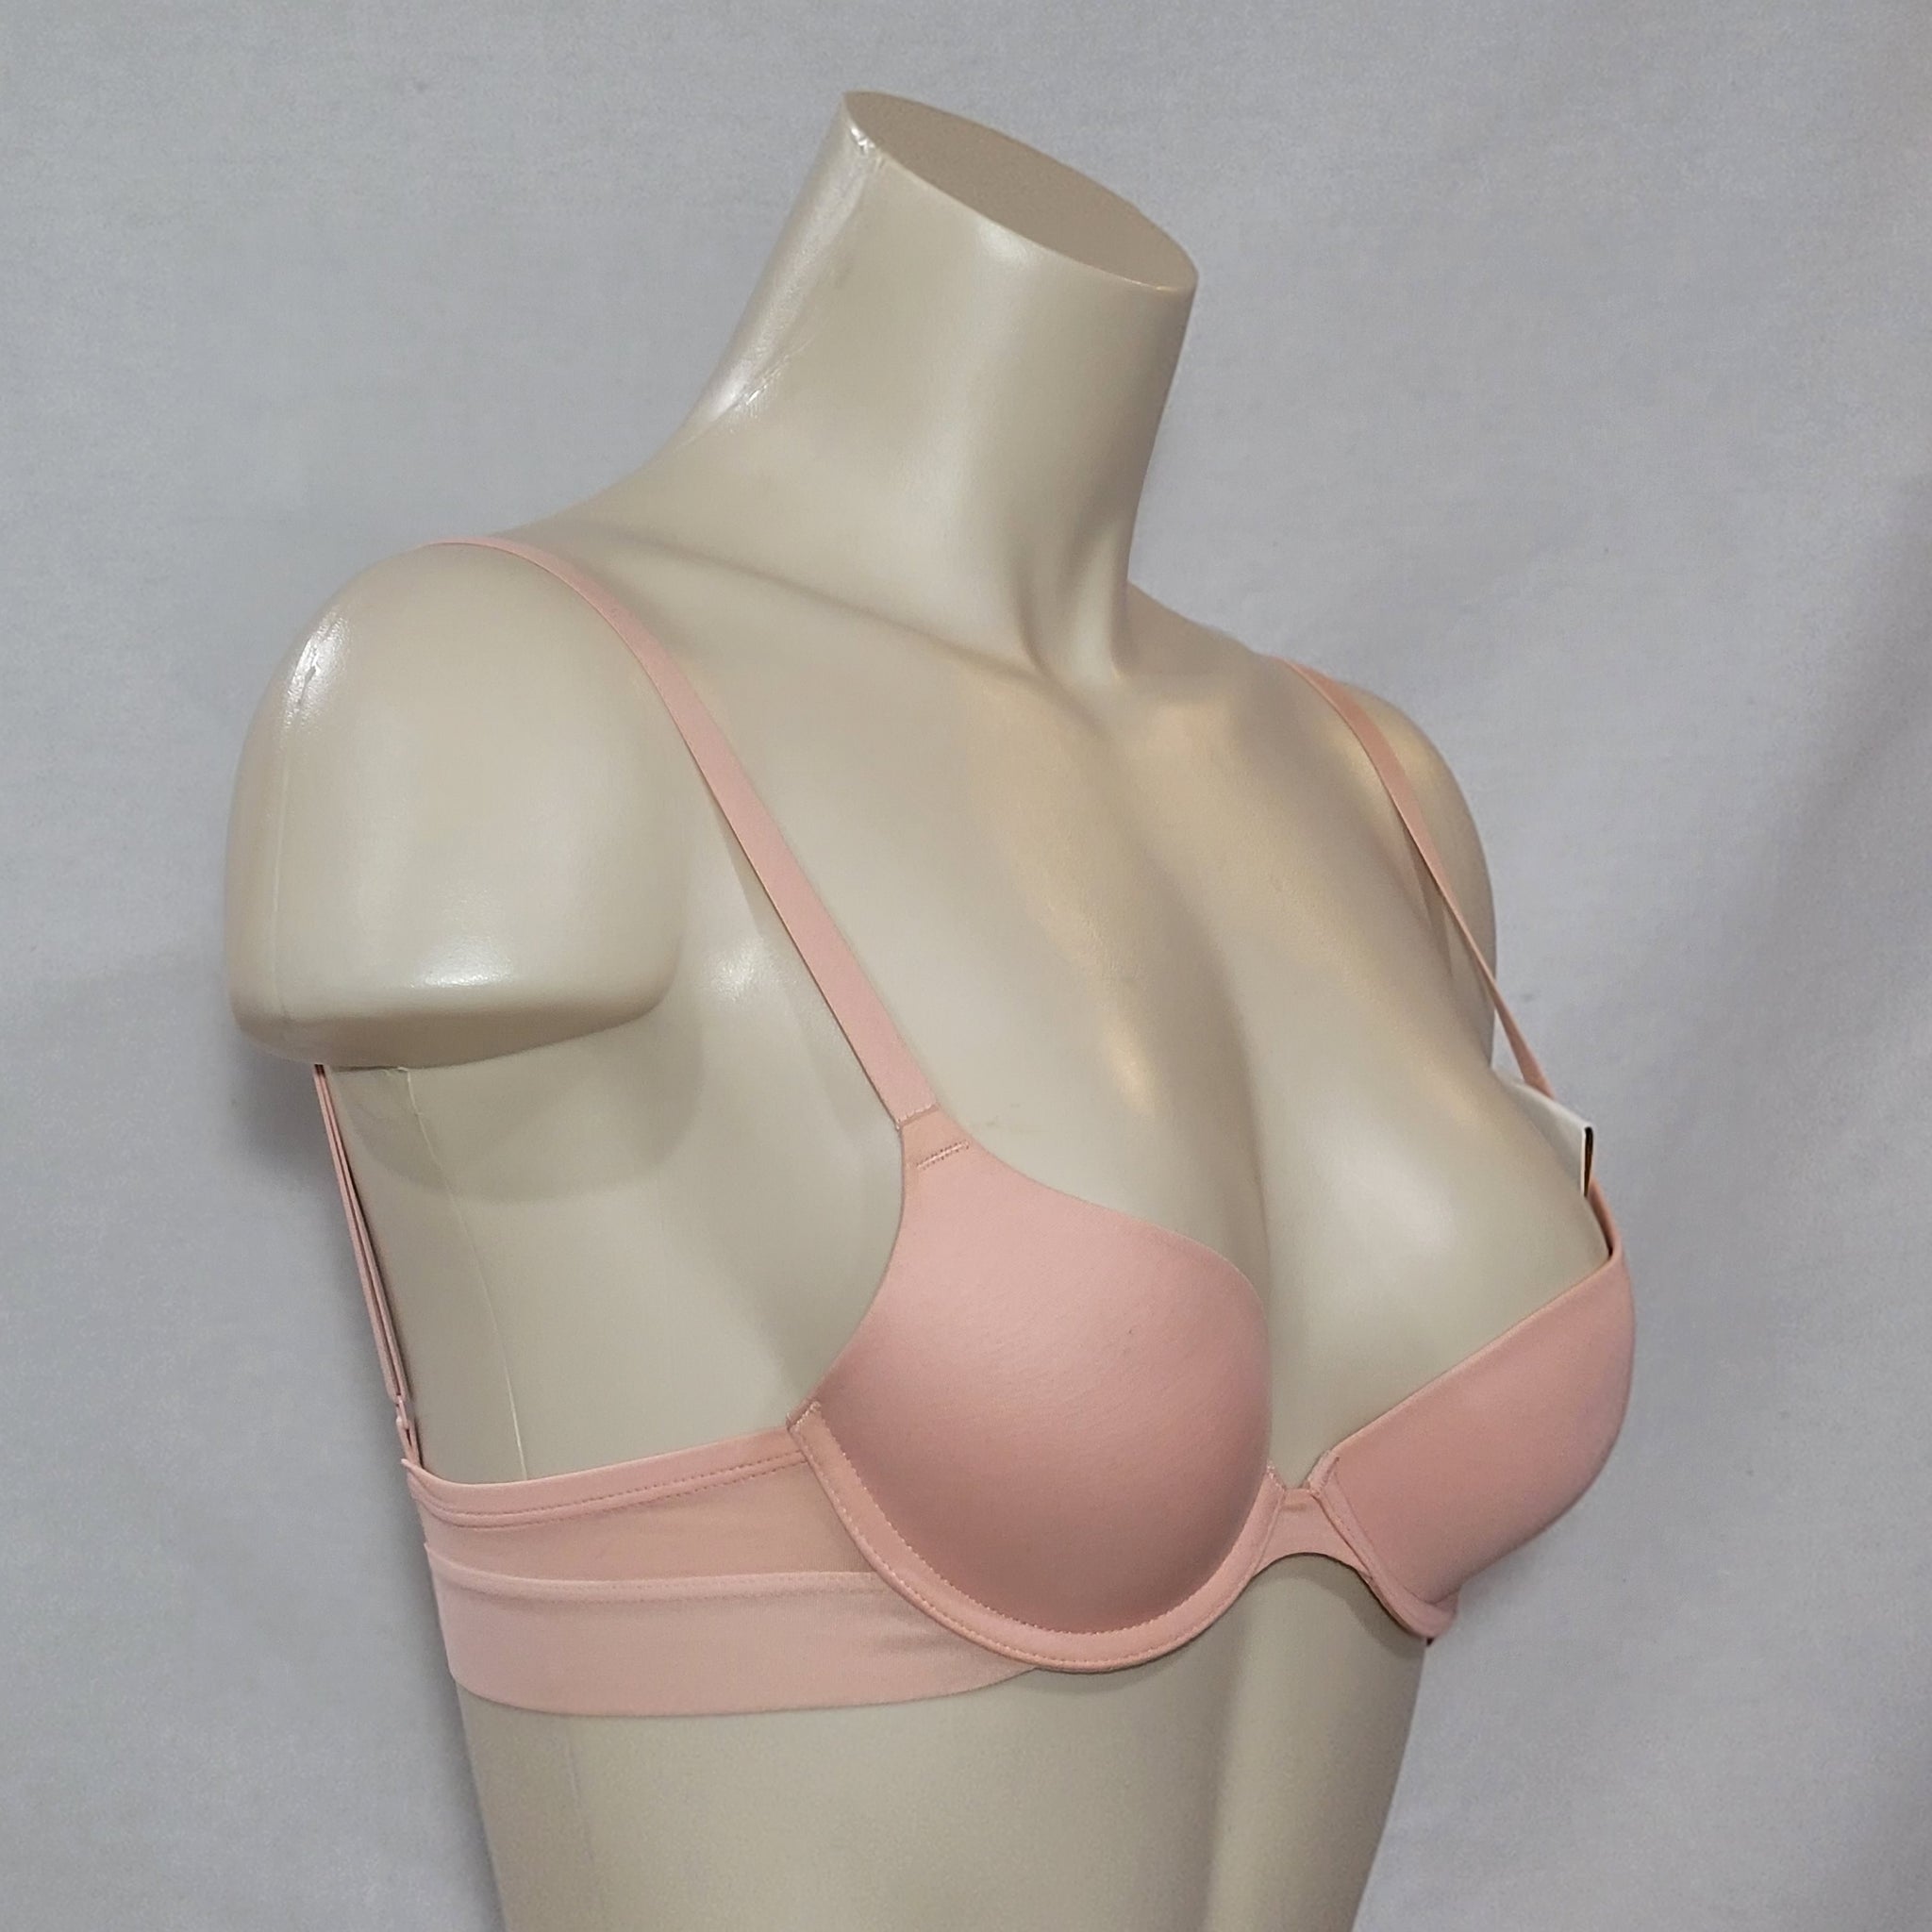 DKNY light weight bra / bras 32DD, 32 double D, pink, baby pink, t-back,  t-shirt